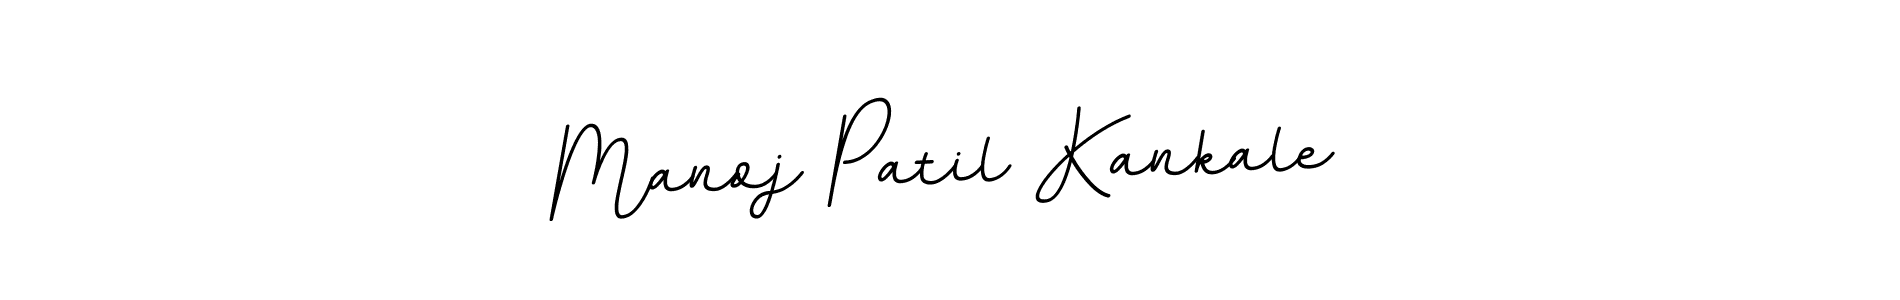 How to Draw Manoj Patil Kankale signature style? BallpointsItalic-DORy9 is a latest design signature styles for name Manoj Patil Kankale. Manoj Patil Kankale signature style 11 images and pictures png